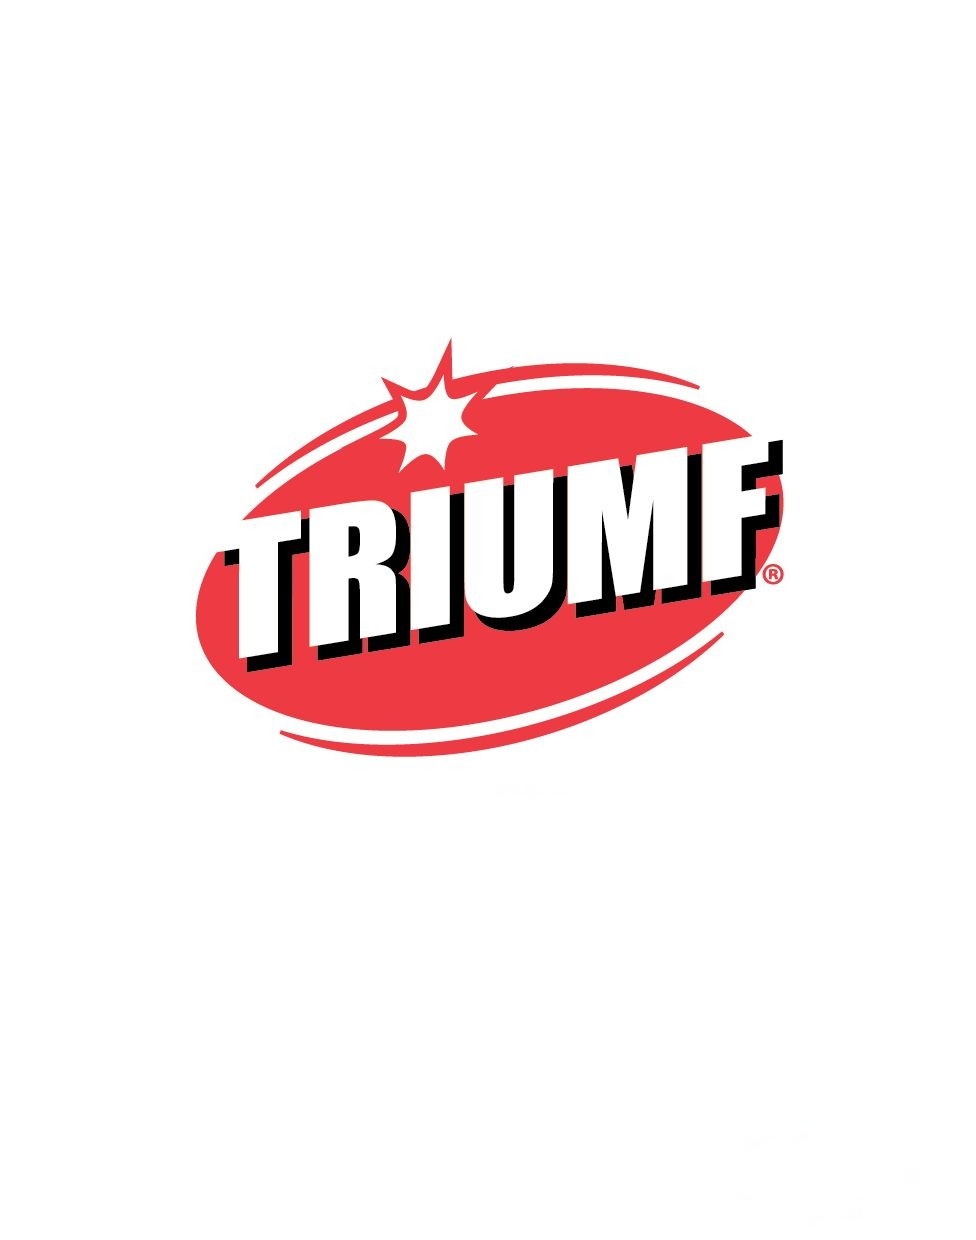 triumf logo full